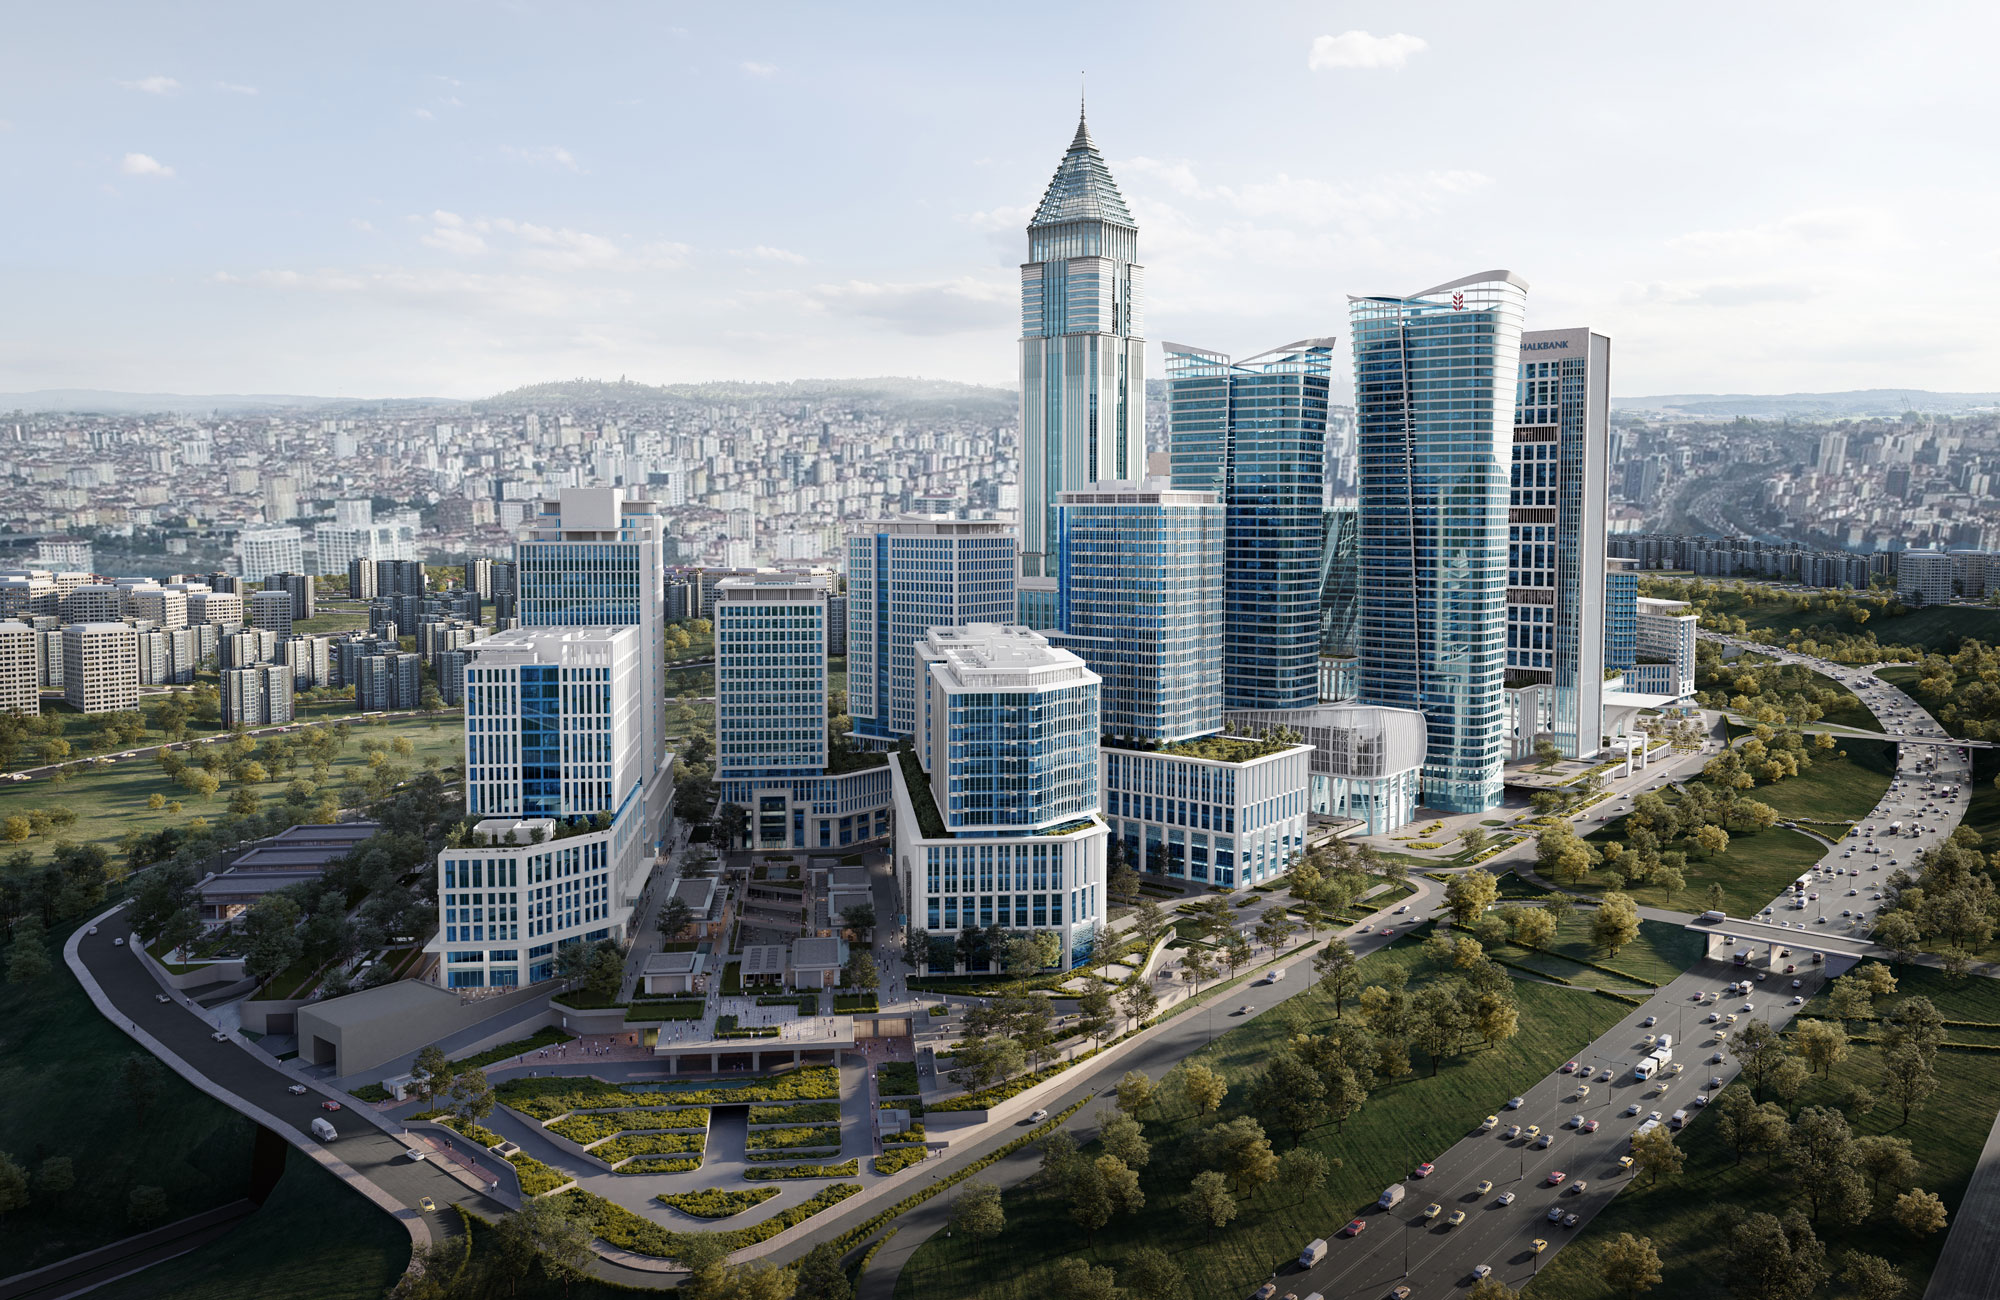 Turkey's long-awaited Istanbul Finance Center (IFC) has finally opened its doors